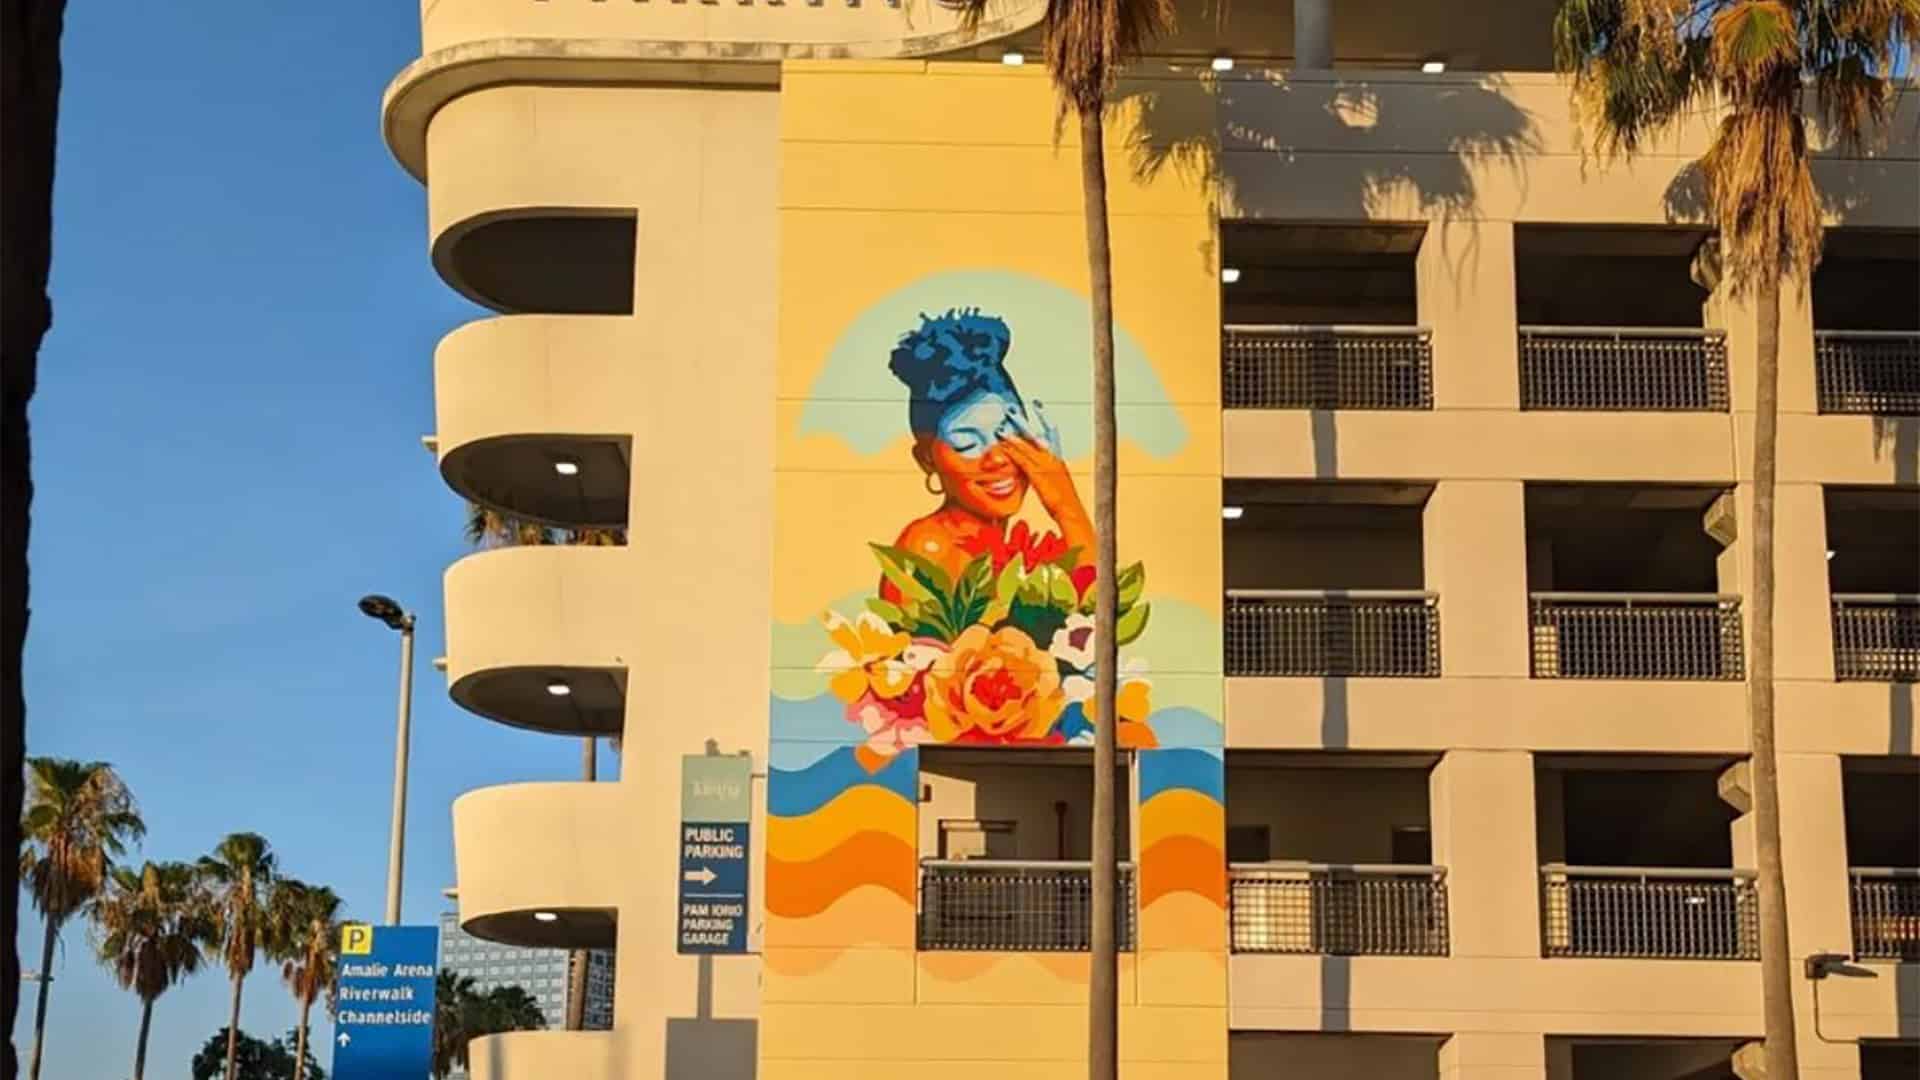 Nneka Jones paints 50-foot mural in Tampa - That's So Tampa